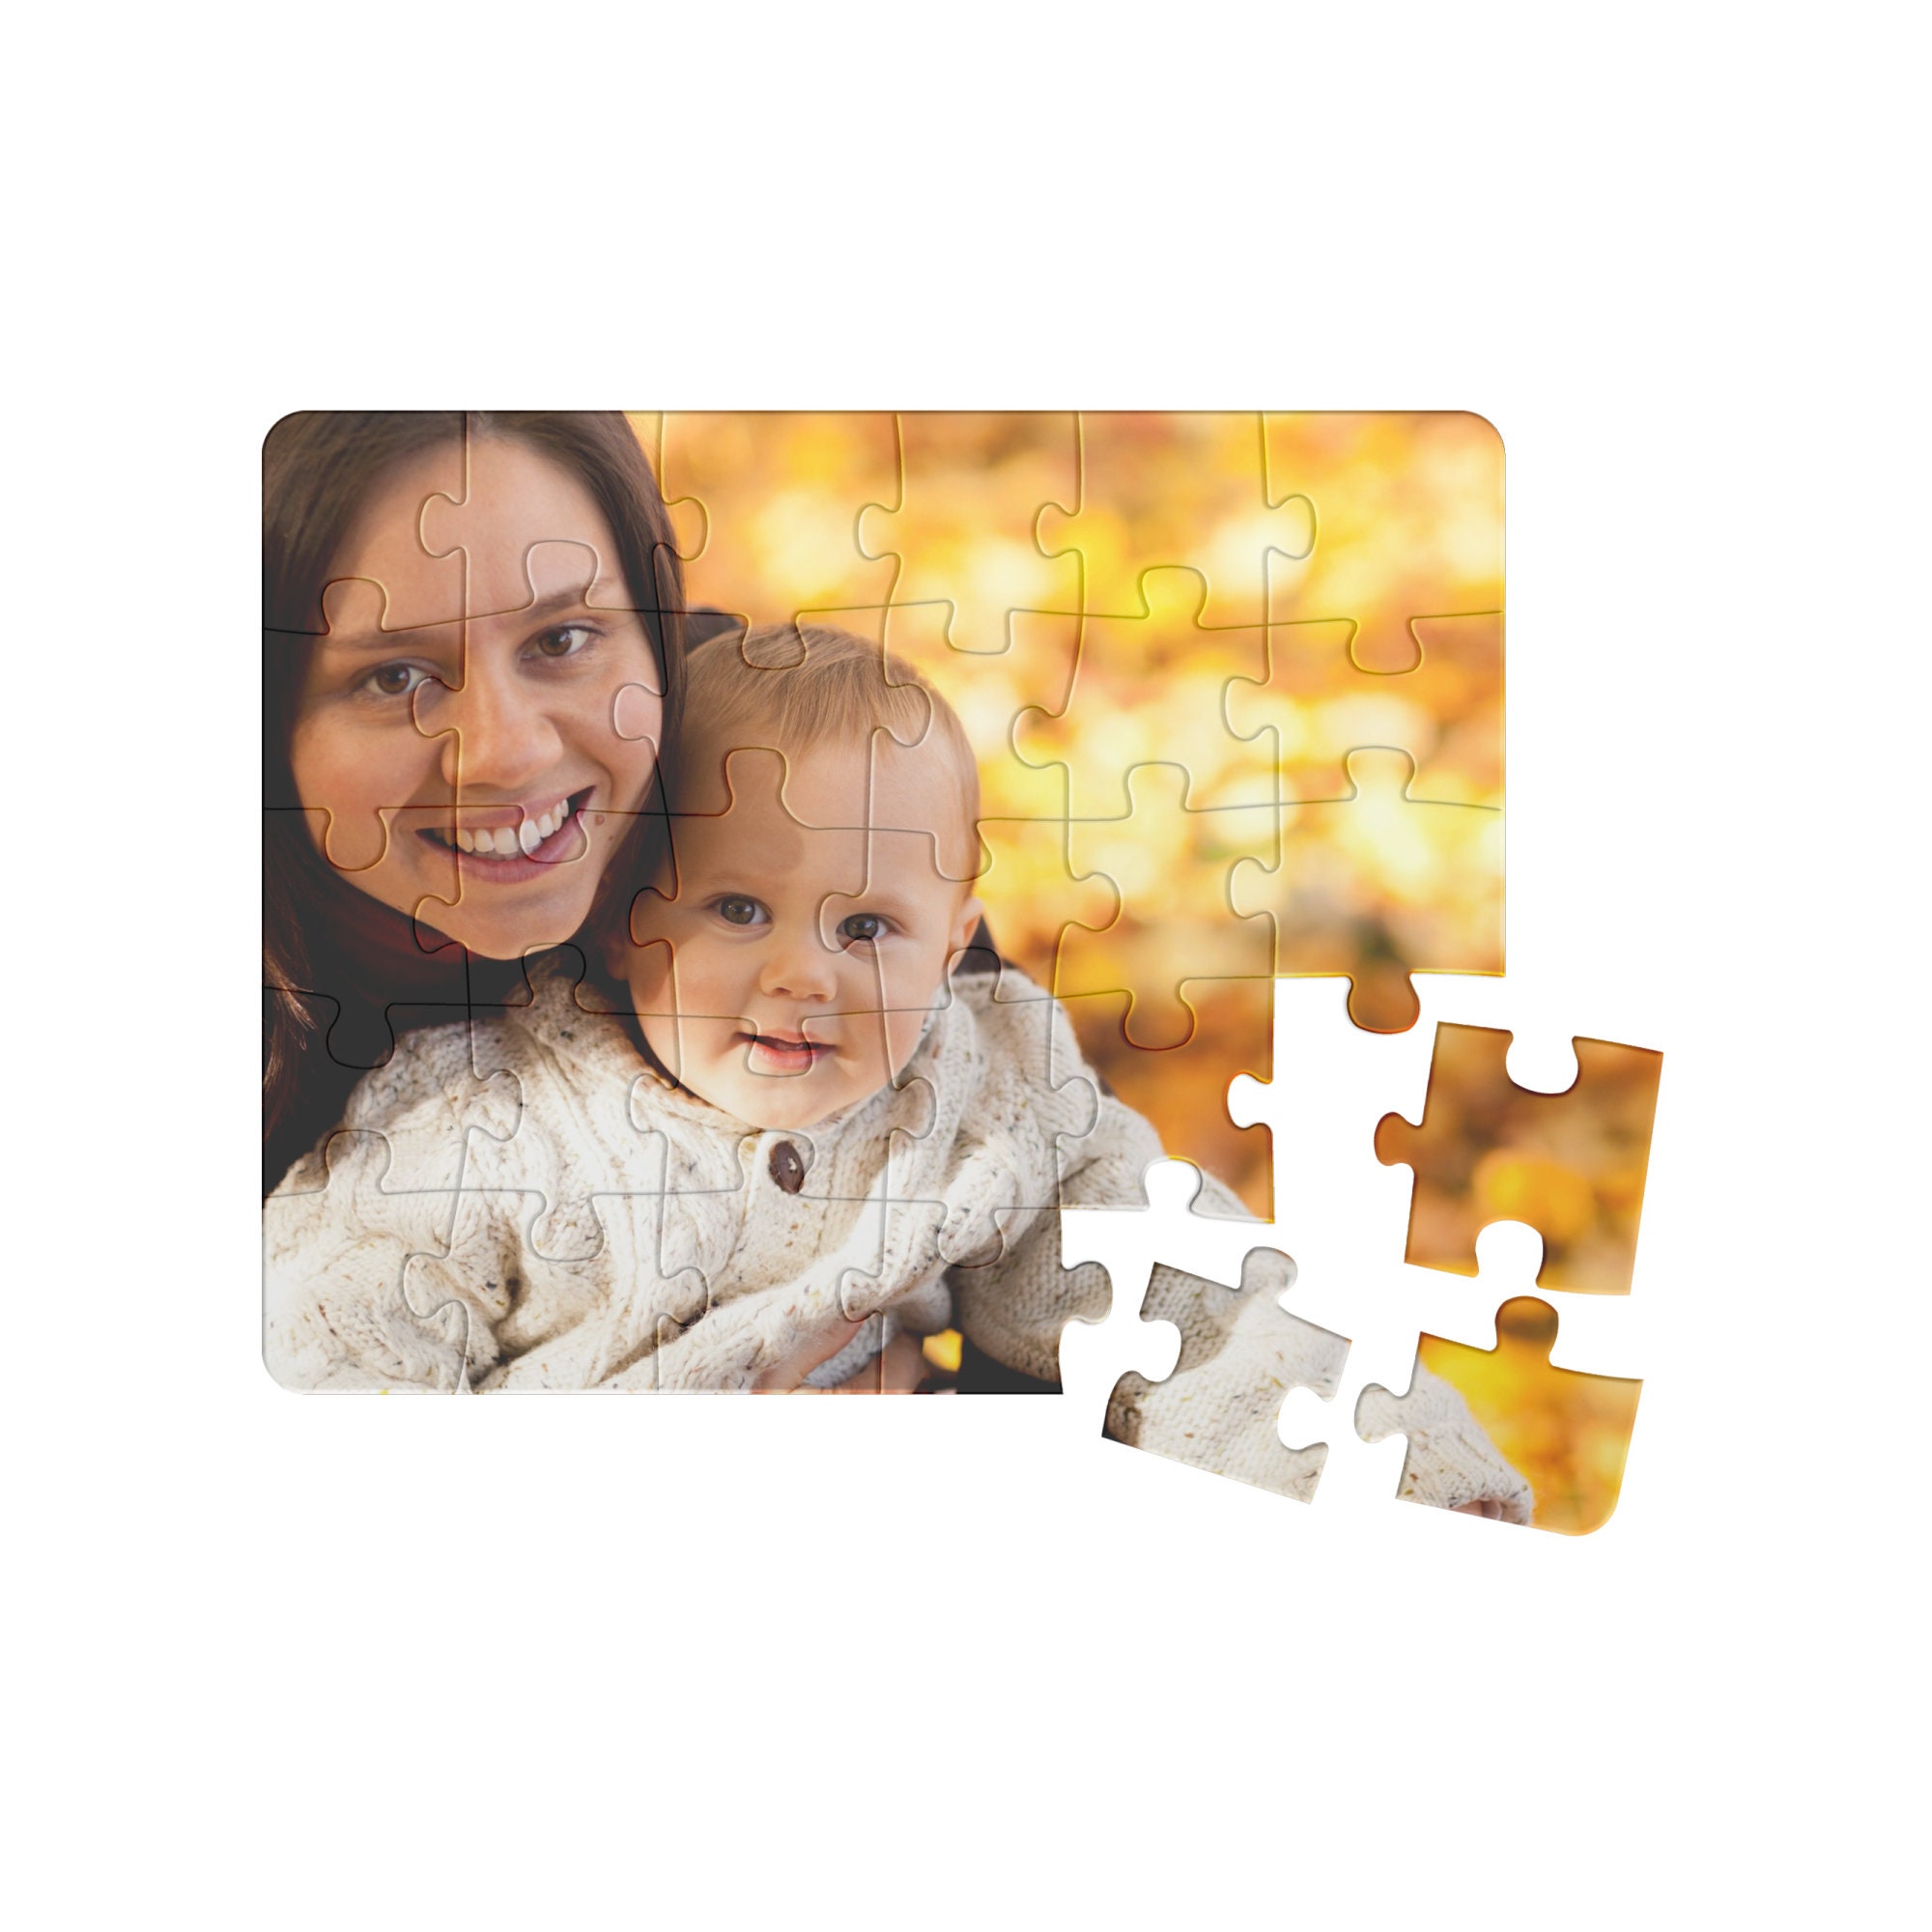 10x14 Custom Photo Puzzle